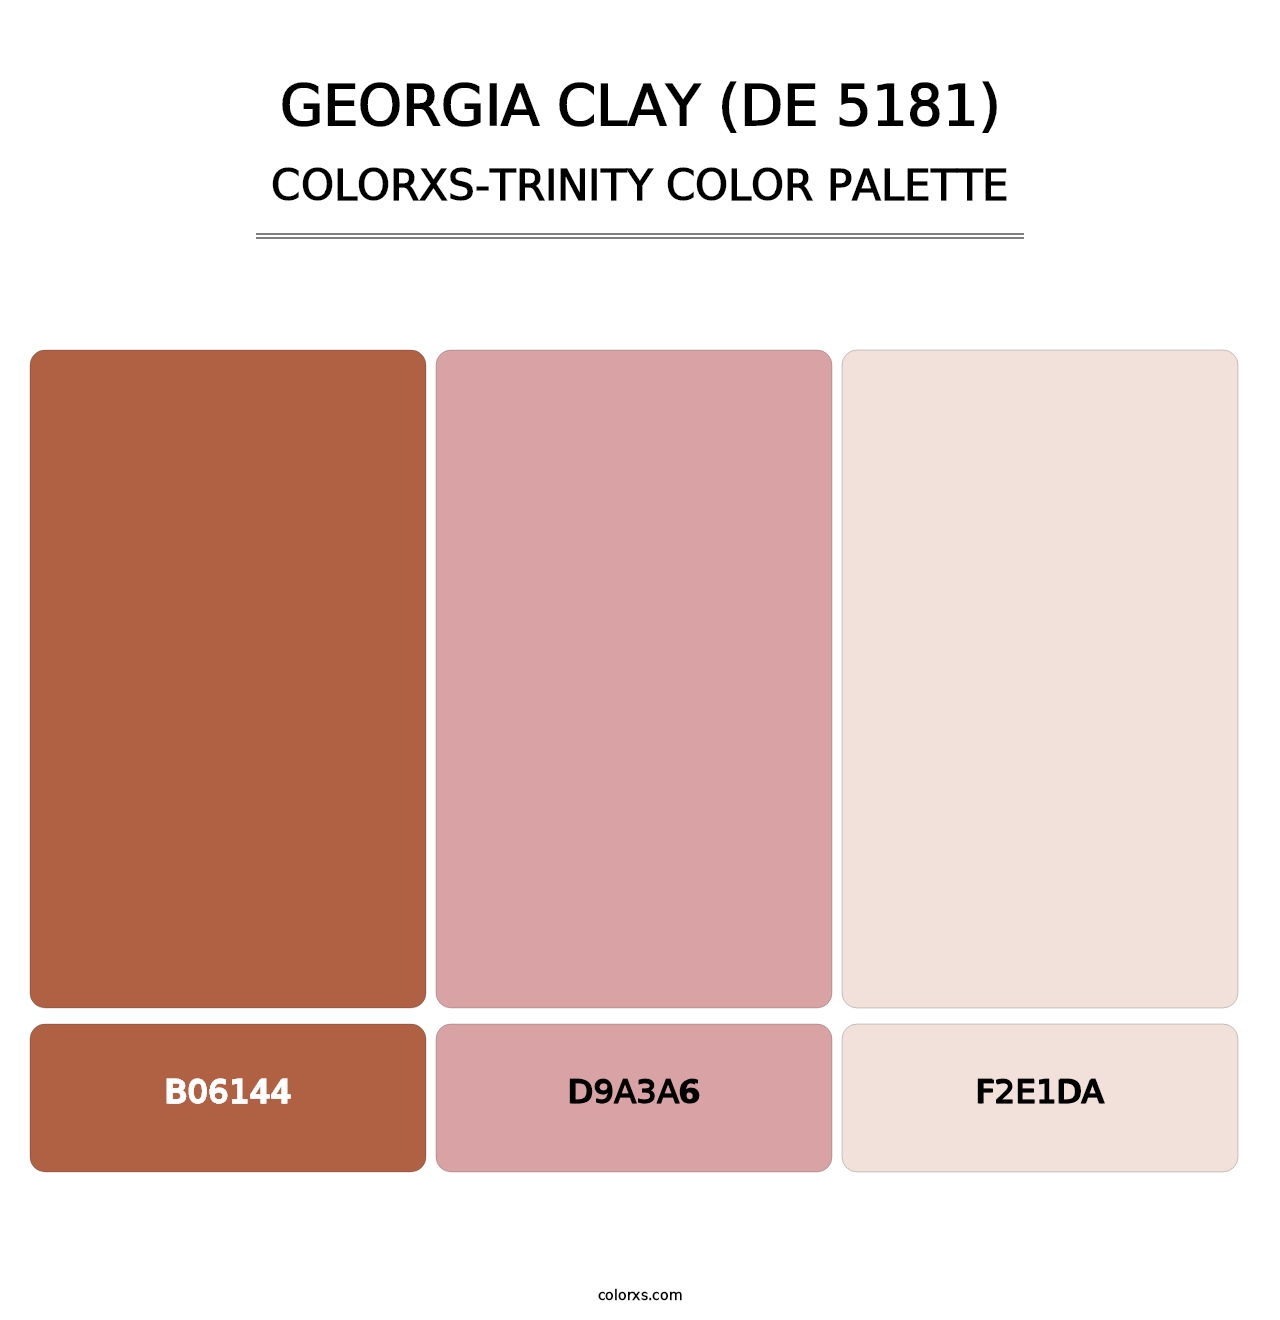 Georgia Clay (DE 5181) - Colorxs Trinity Palette